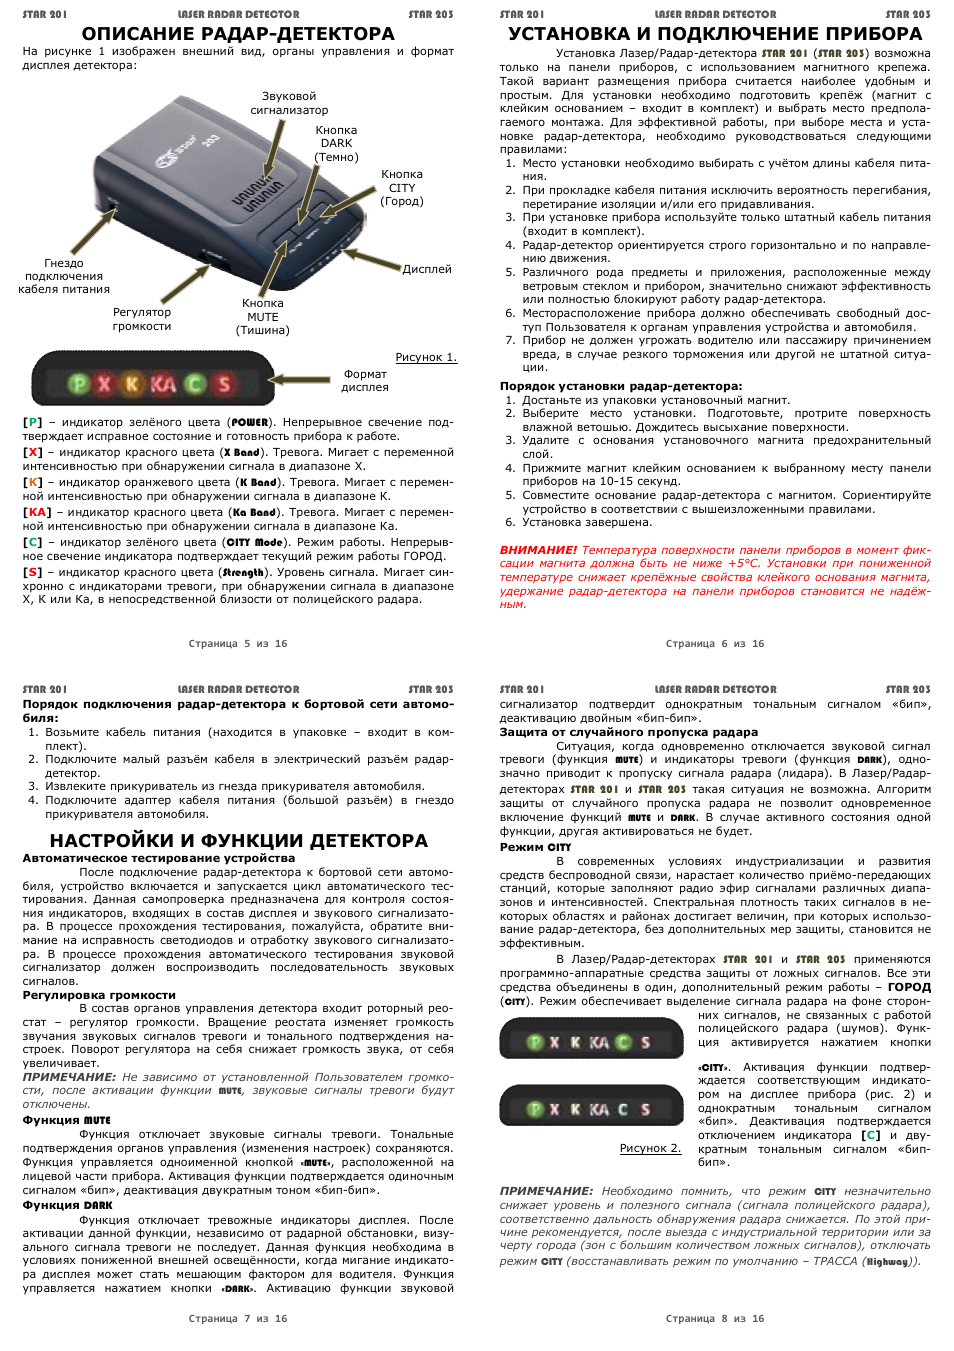 Штраф за антирадар в россии: разрешен радар-детектор или нет